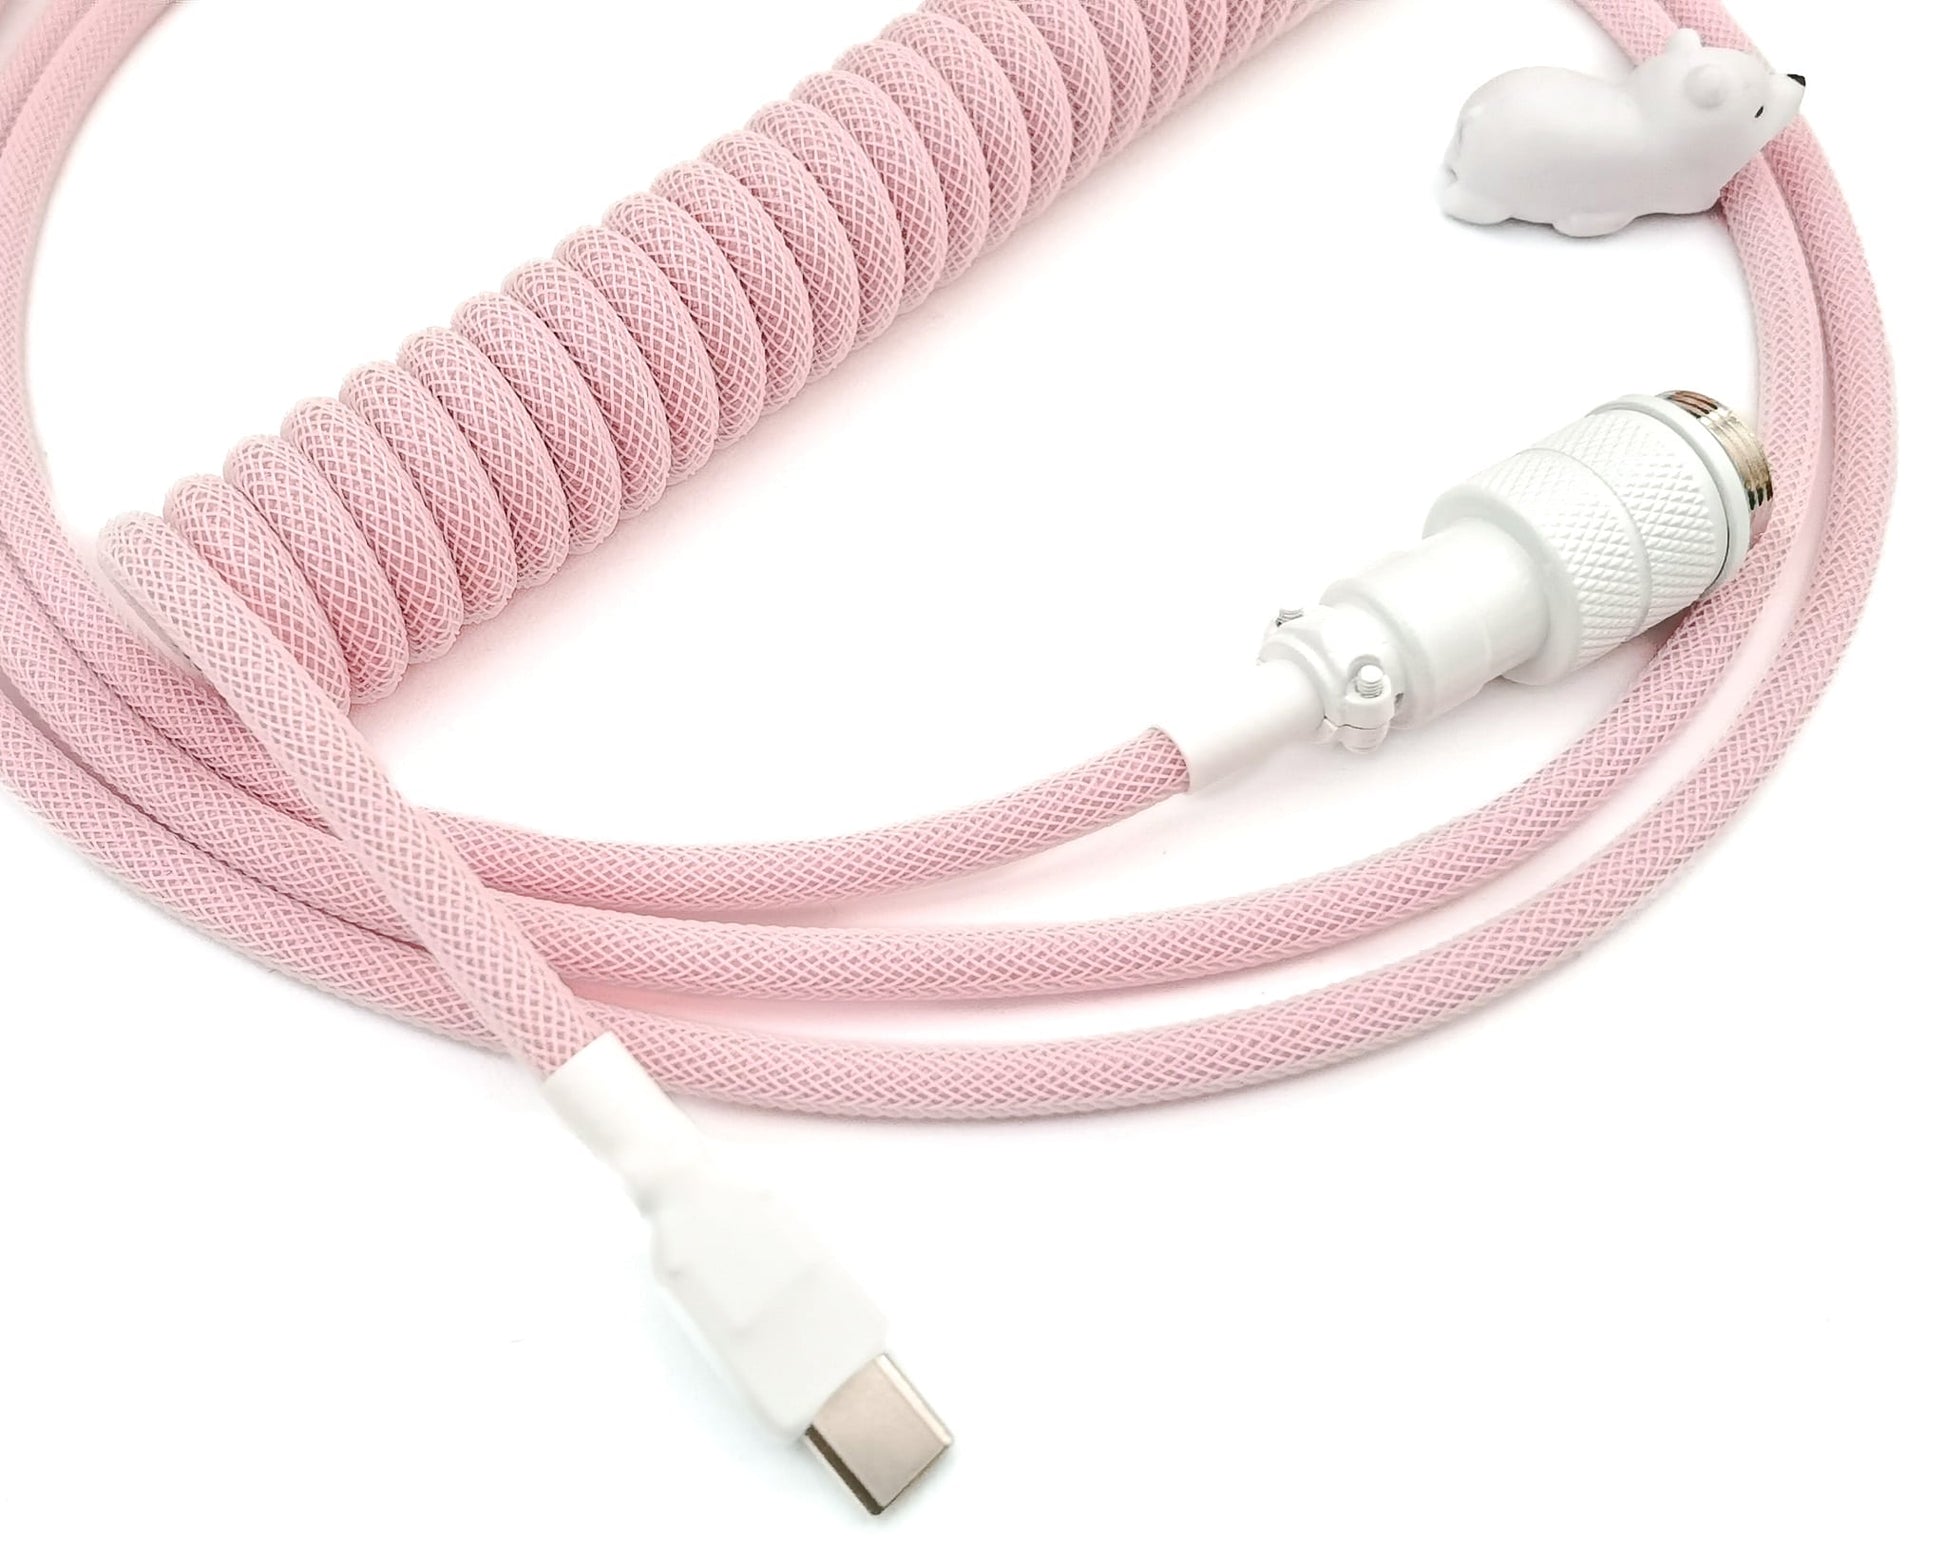 GMK Peach Blossom coiled cable